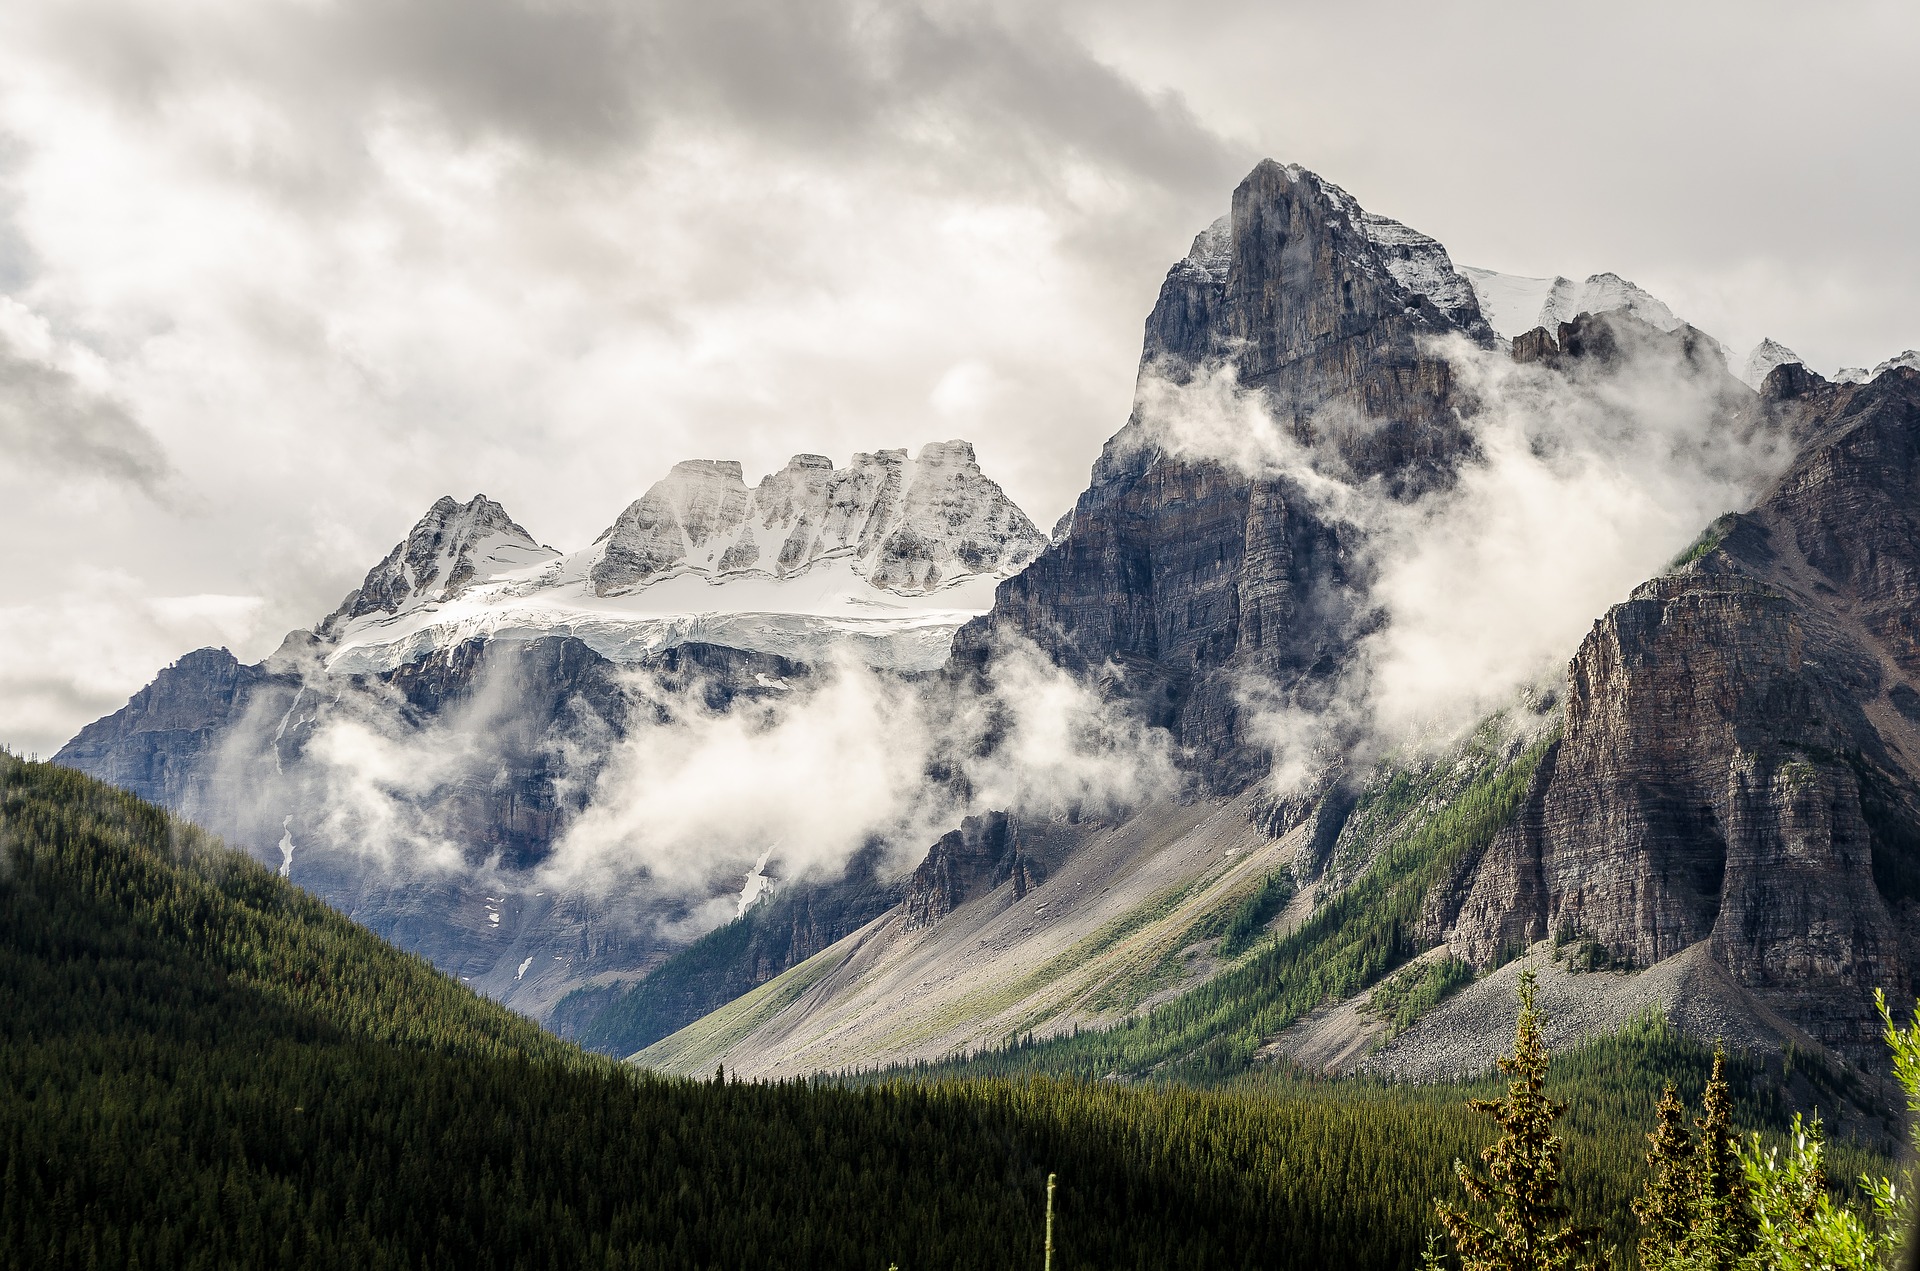 The Three Sisters mountain range in Alberta, Canada.